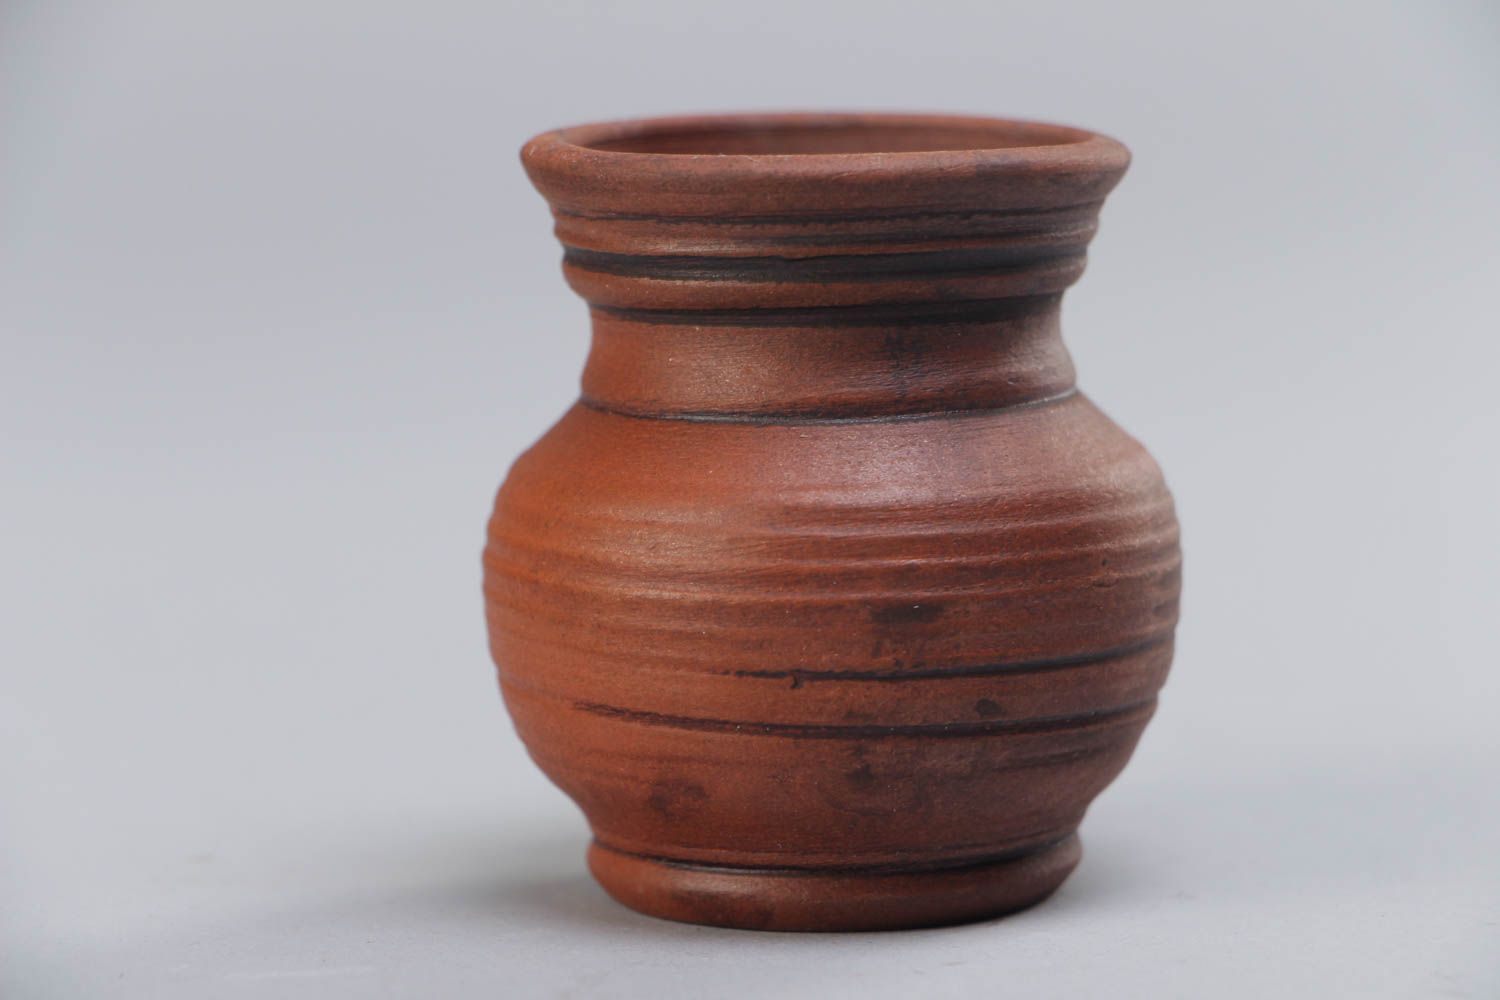 10 oz ceramic creamer jug in terracotta color 0,13 lb photo 2